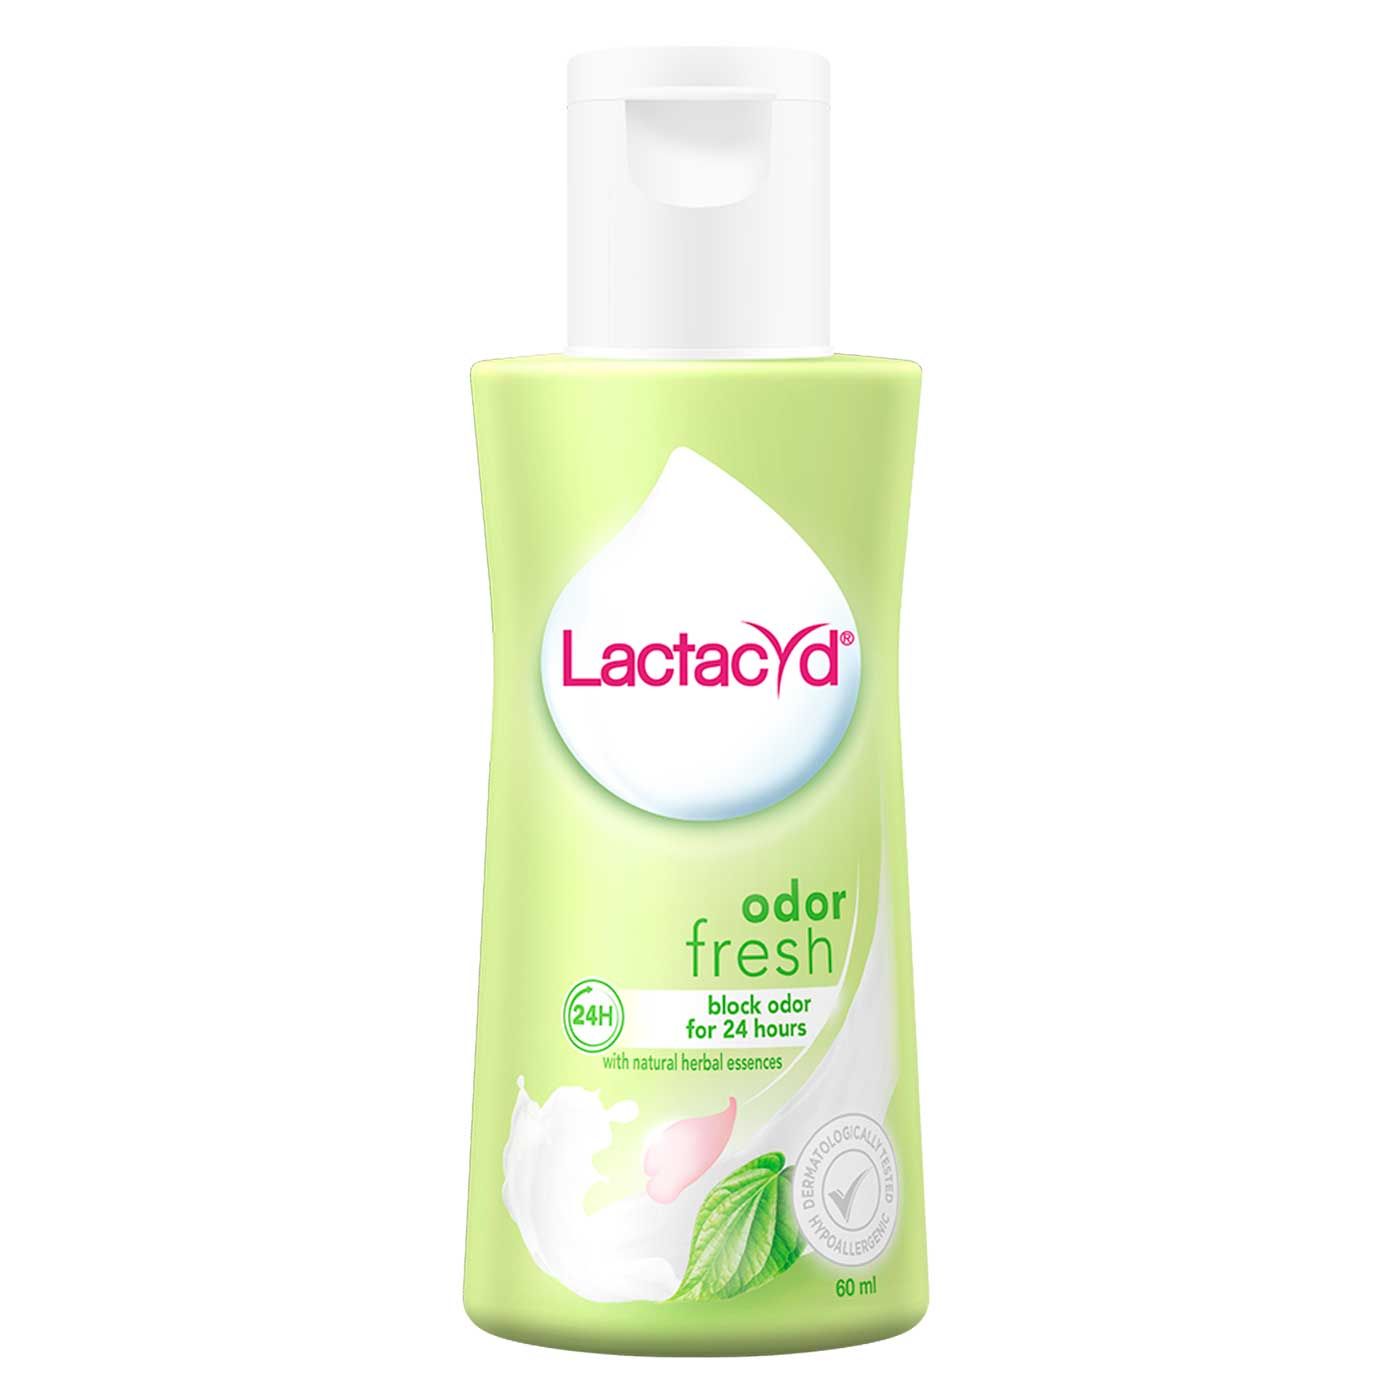 Lactacyd Odor Fresh Pembersih Kewanitaan 60ml - 2